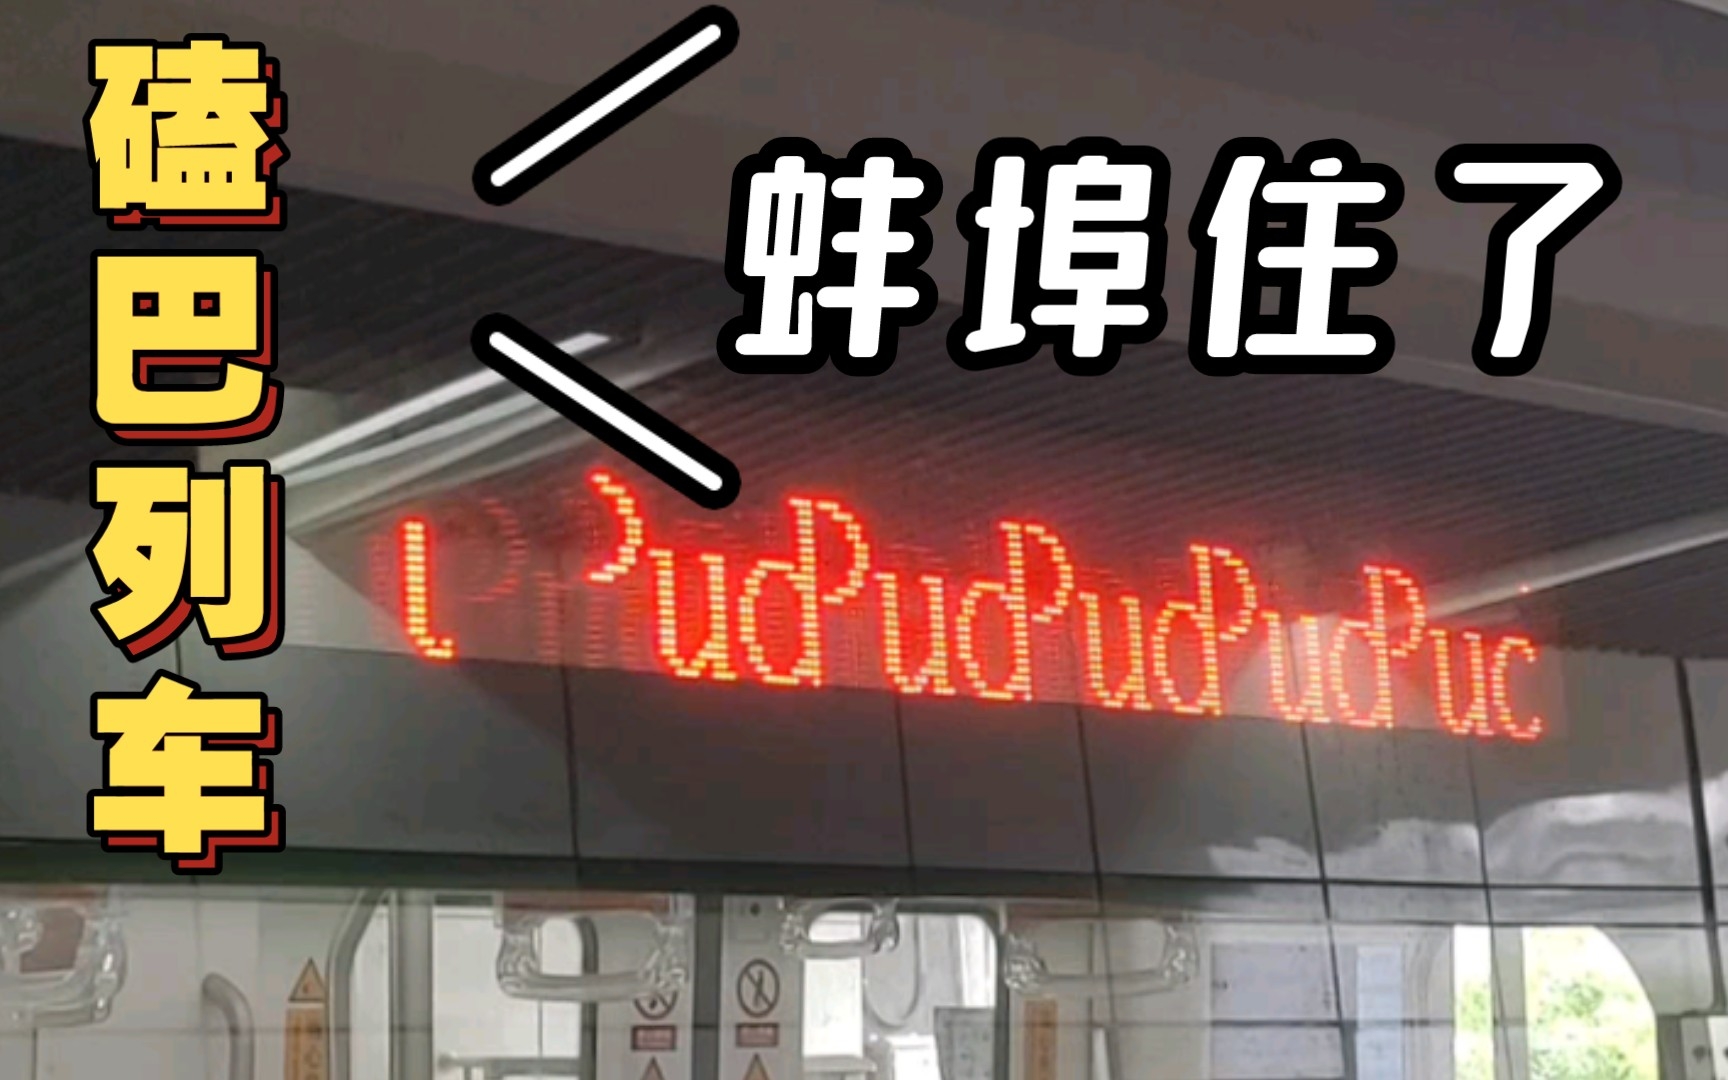 本次列车终点站：PudPudPudPudong International Airport